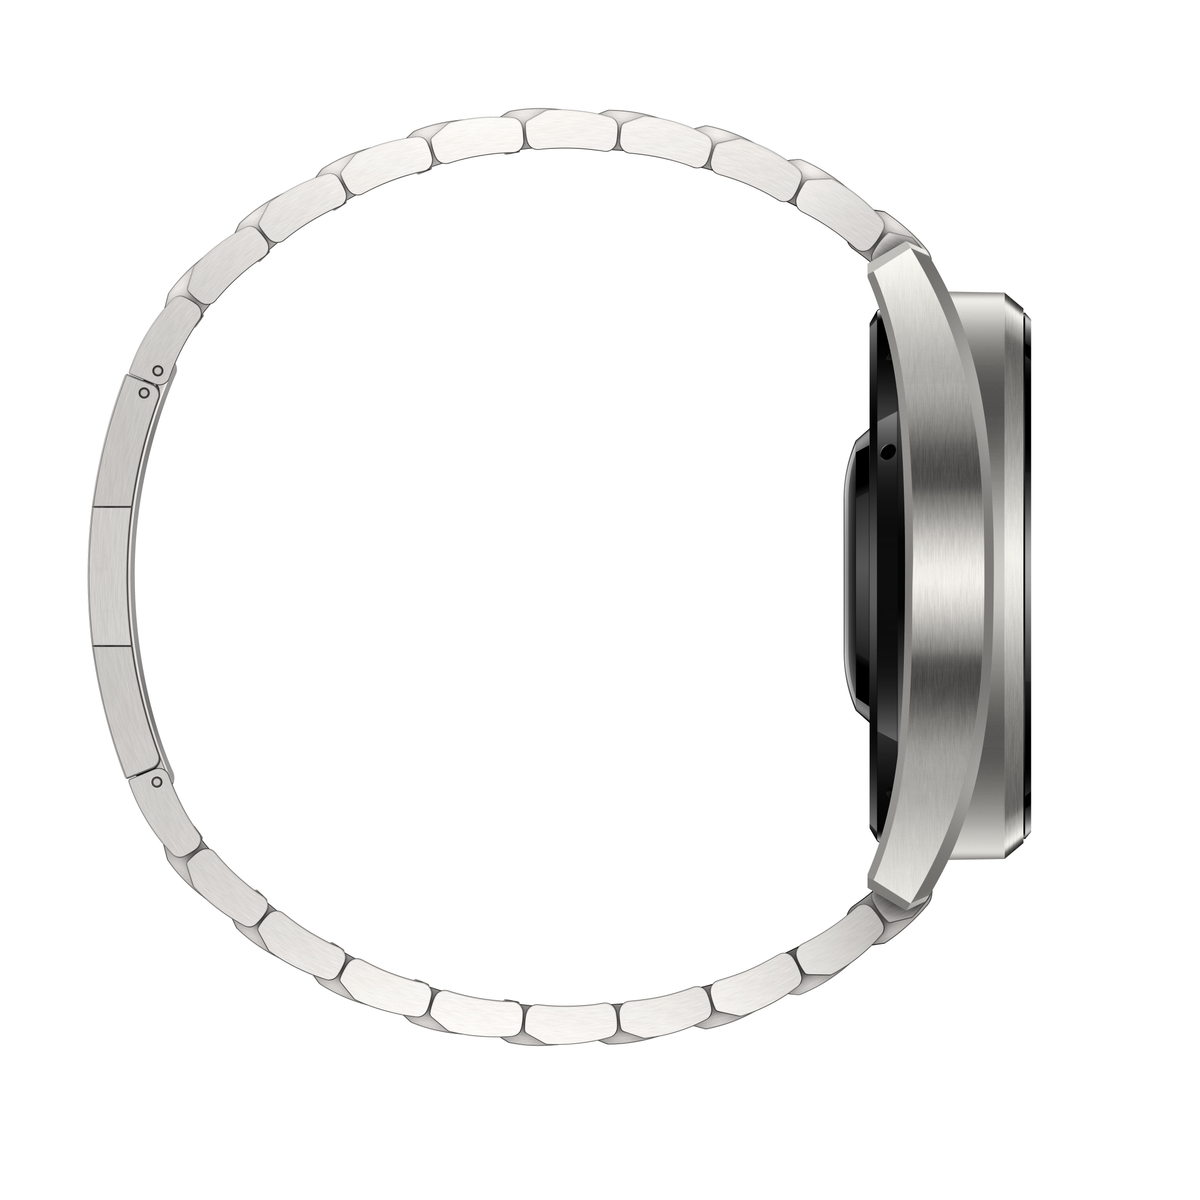 140-210 3 Steel, Stainless Gray Titanium Smartwatch mm, PRO GRAY ELITE TITANIUM WATCH HUAWEI GALILEO-L50E